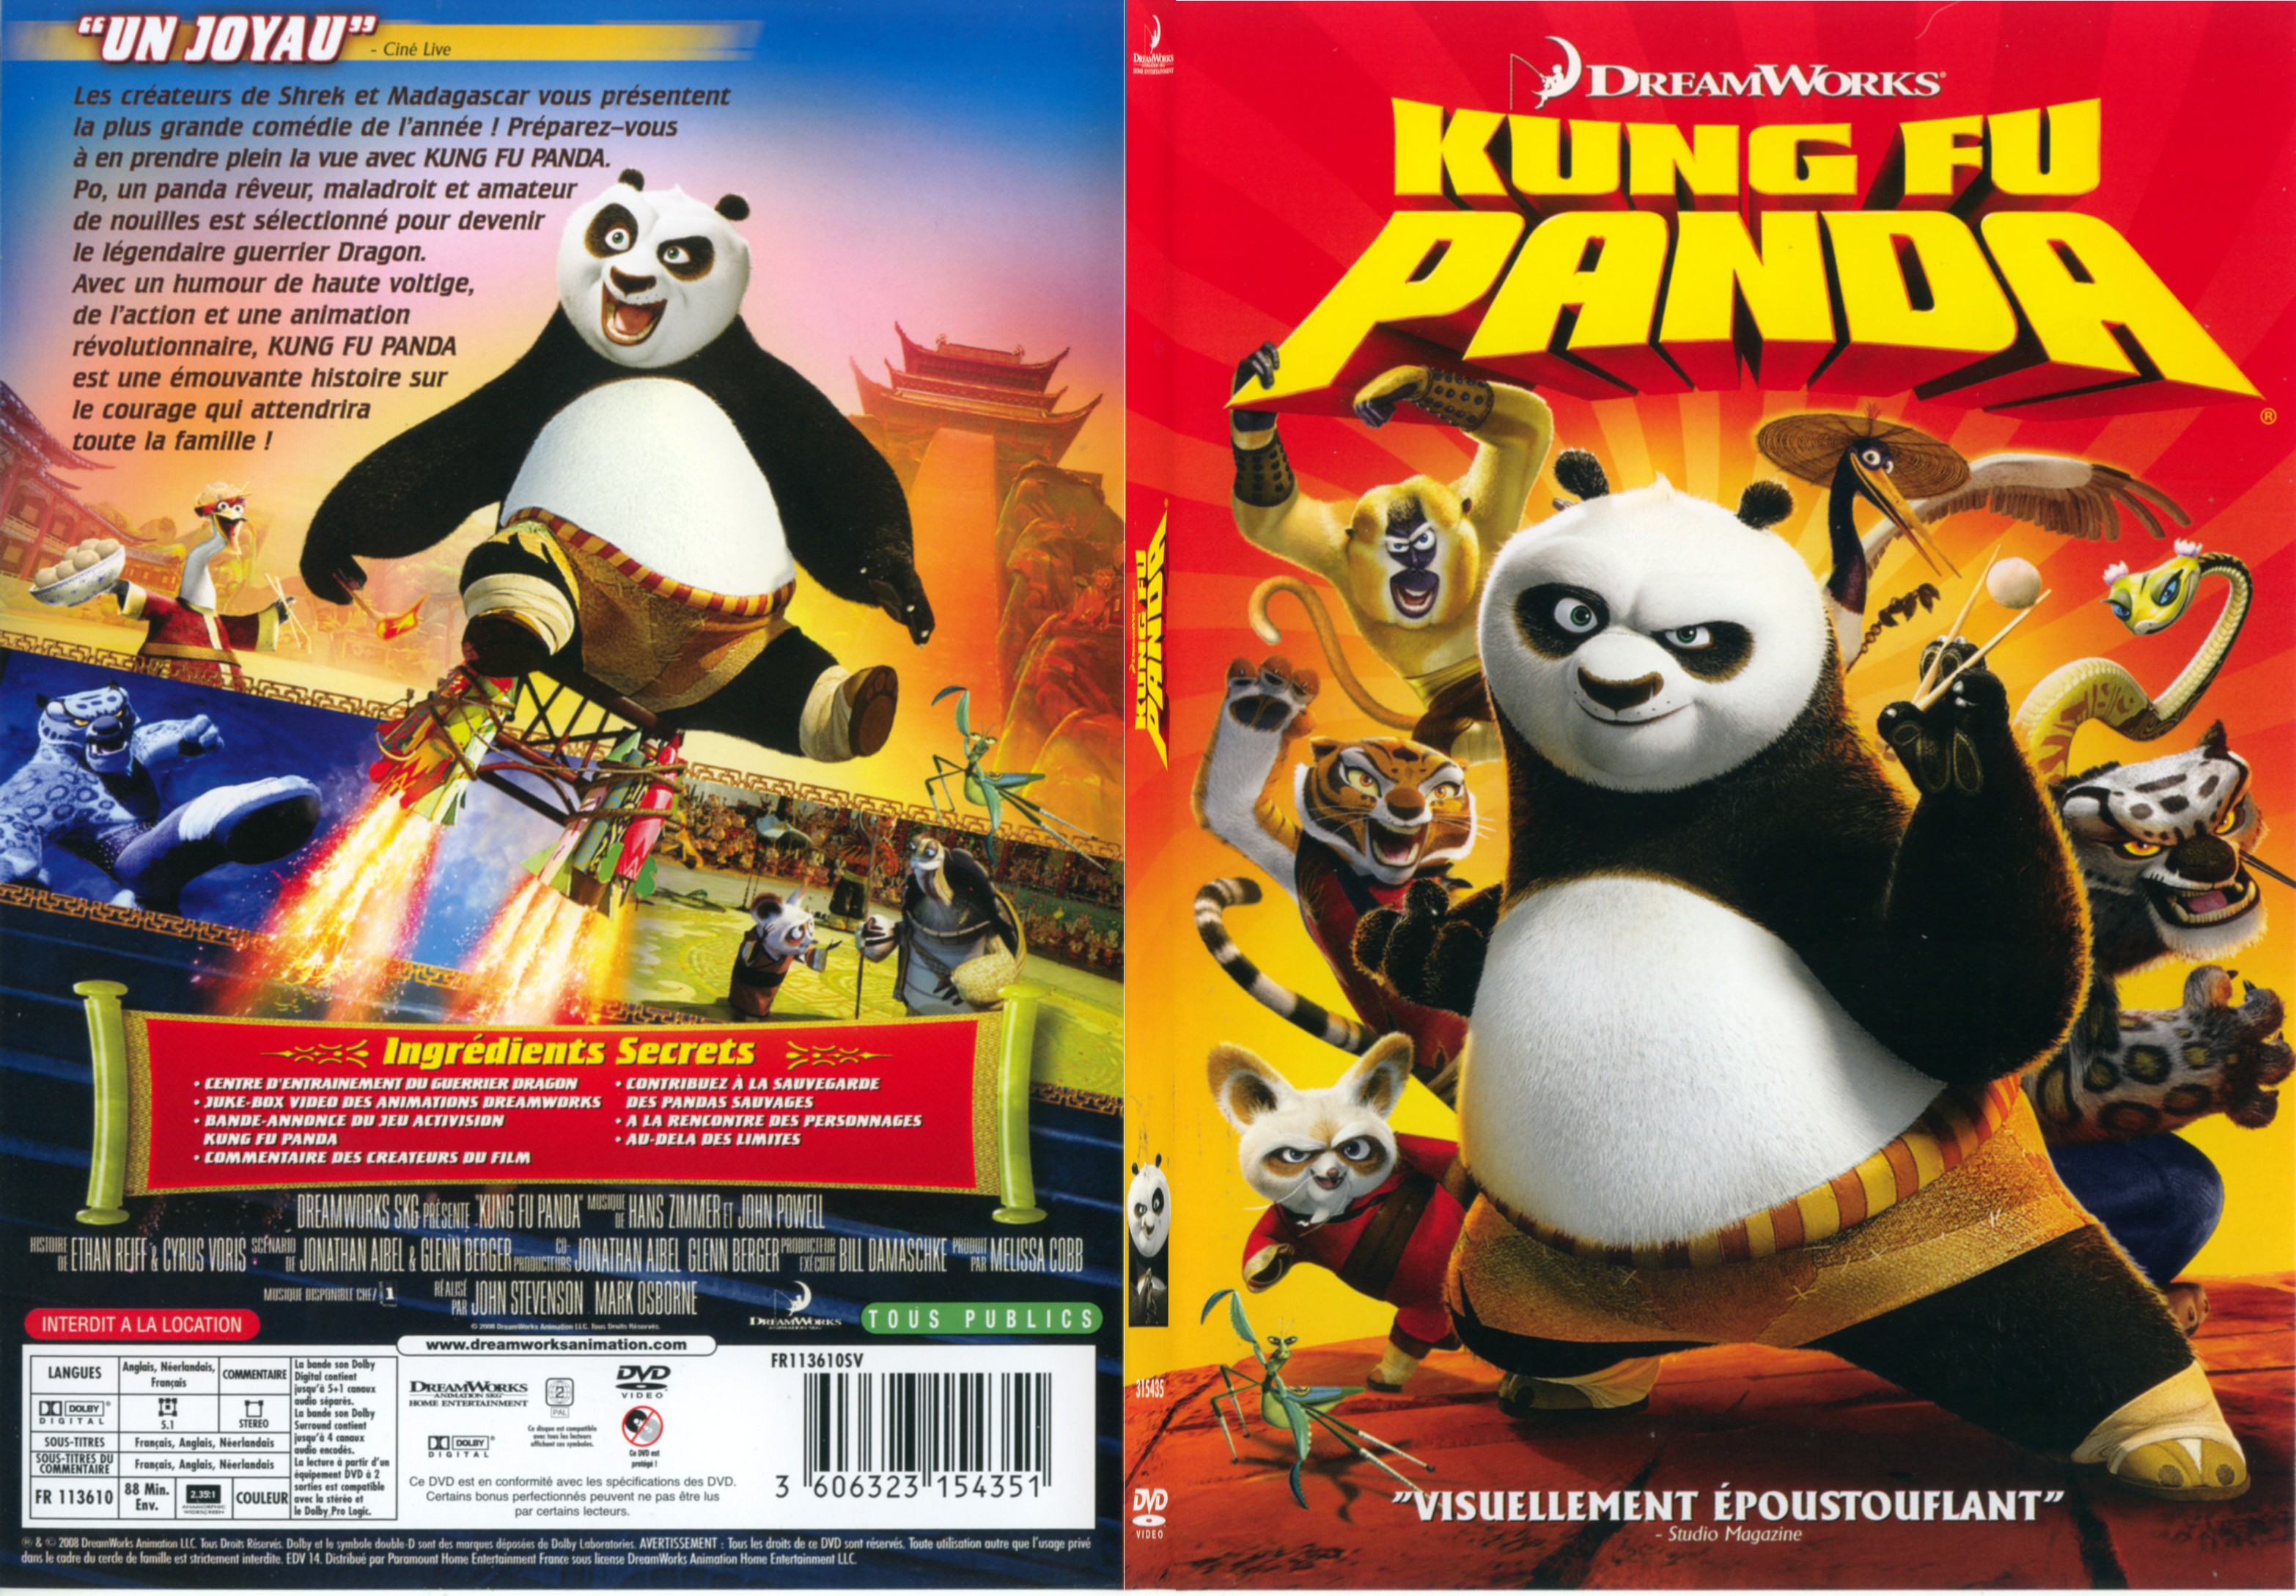 Jaquette DVD Kung fu panda - SLIM